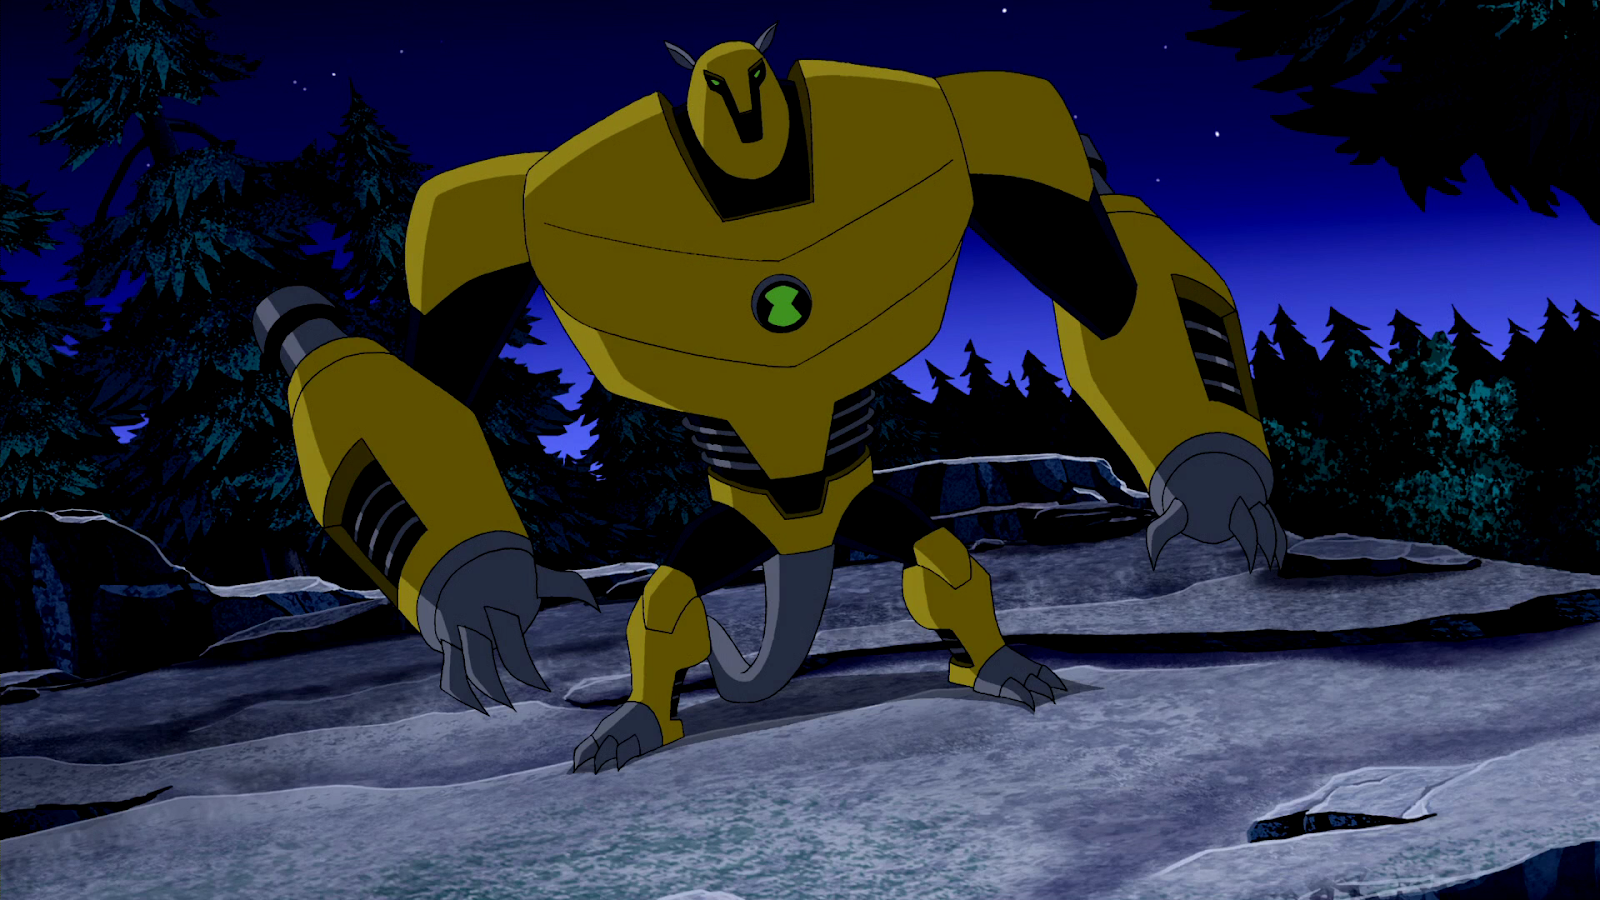 Armodrillo has a large torso and has a robotic yellow armor look. 